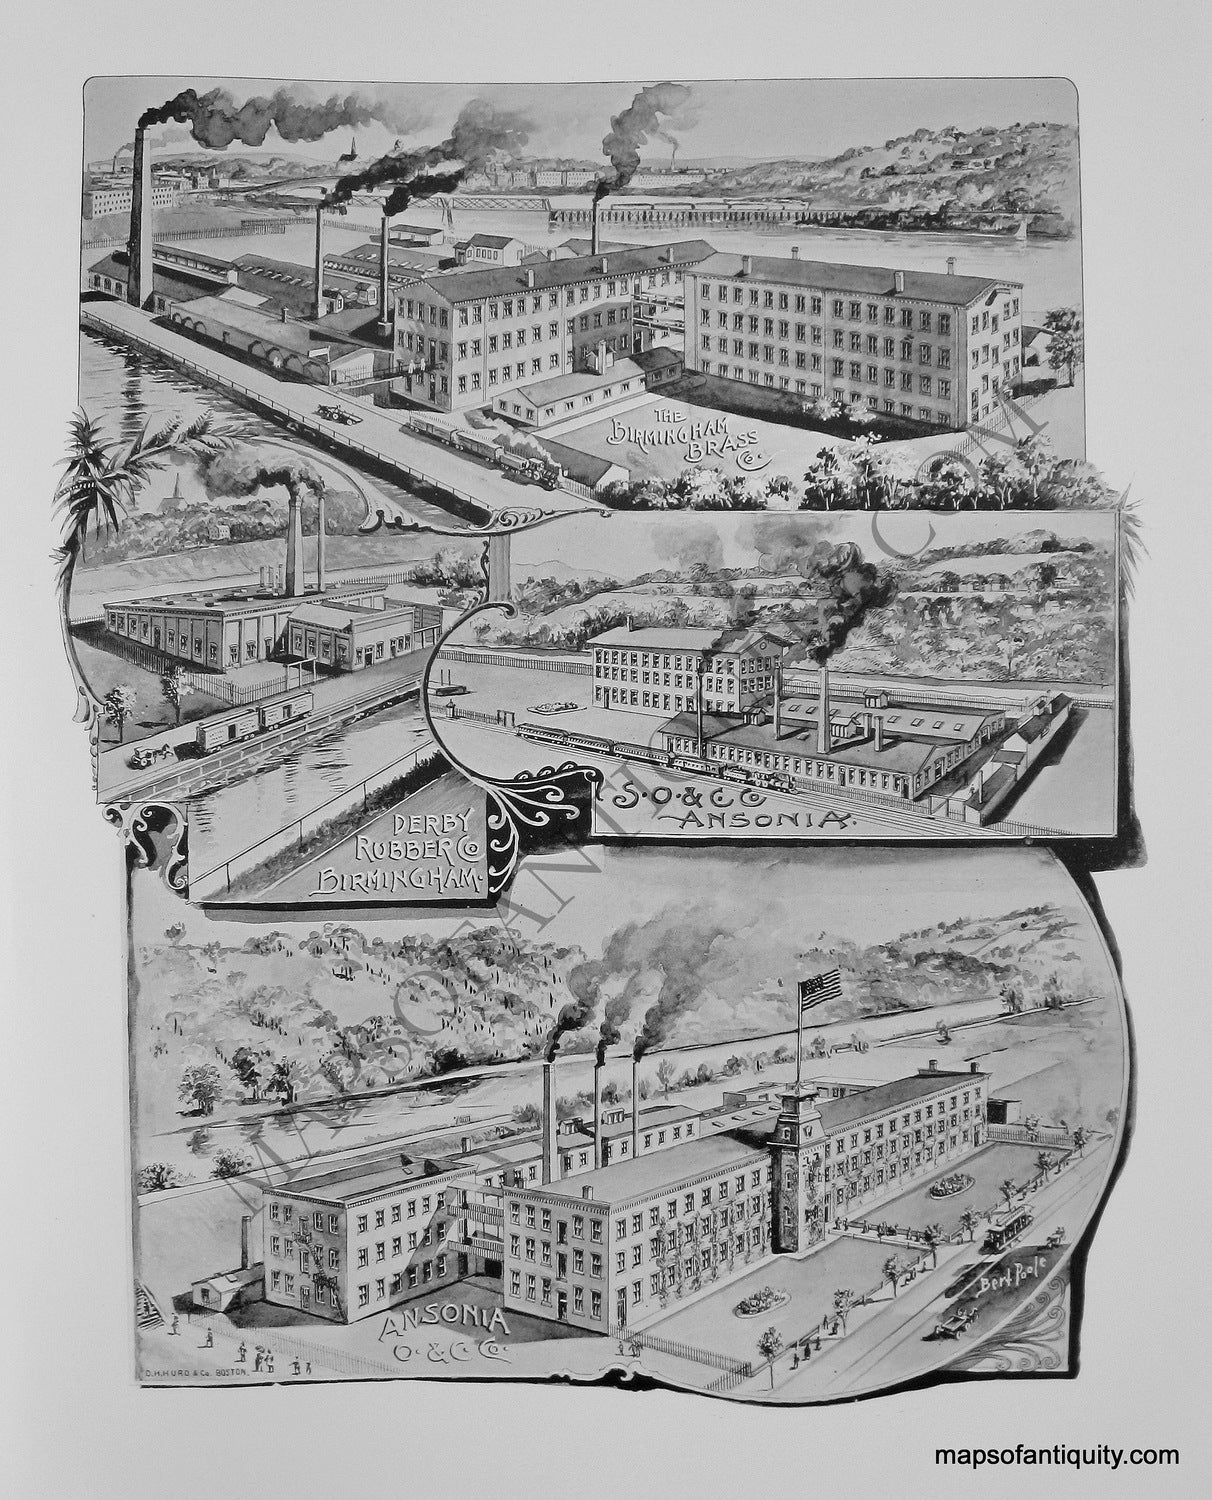 Antique-Illustration-The-Birmingham-Brass-Derby-Rubber-Ansonia-Birmingham-Conn.-United-States-Connecticut-1893-Hurd-Maps-Of-Antiquity